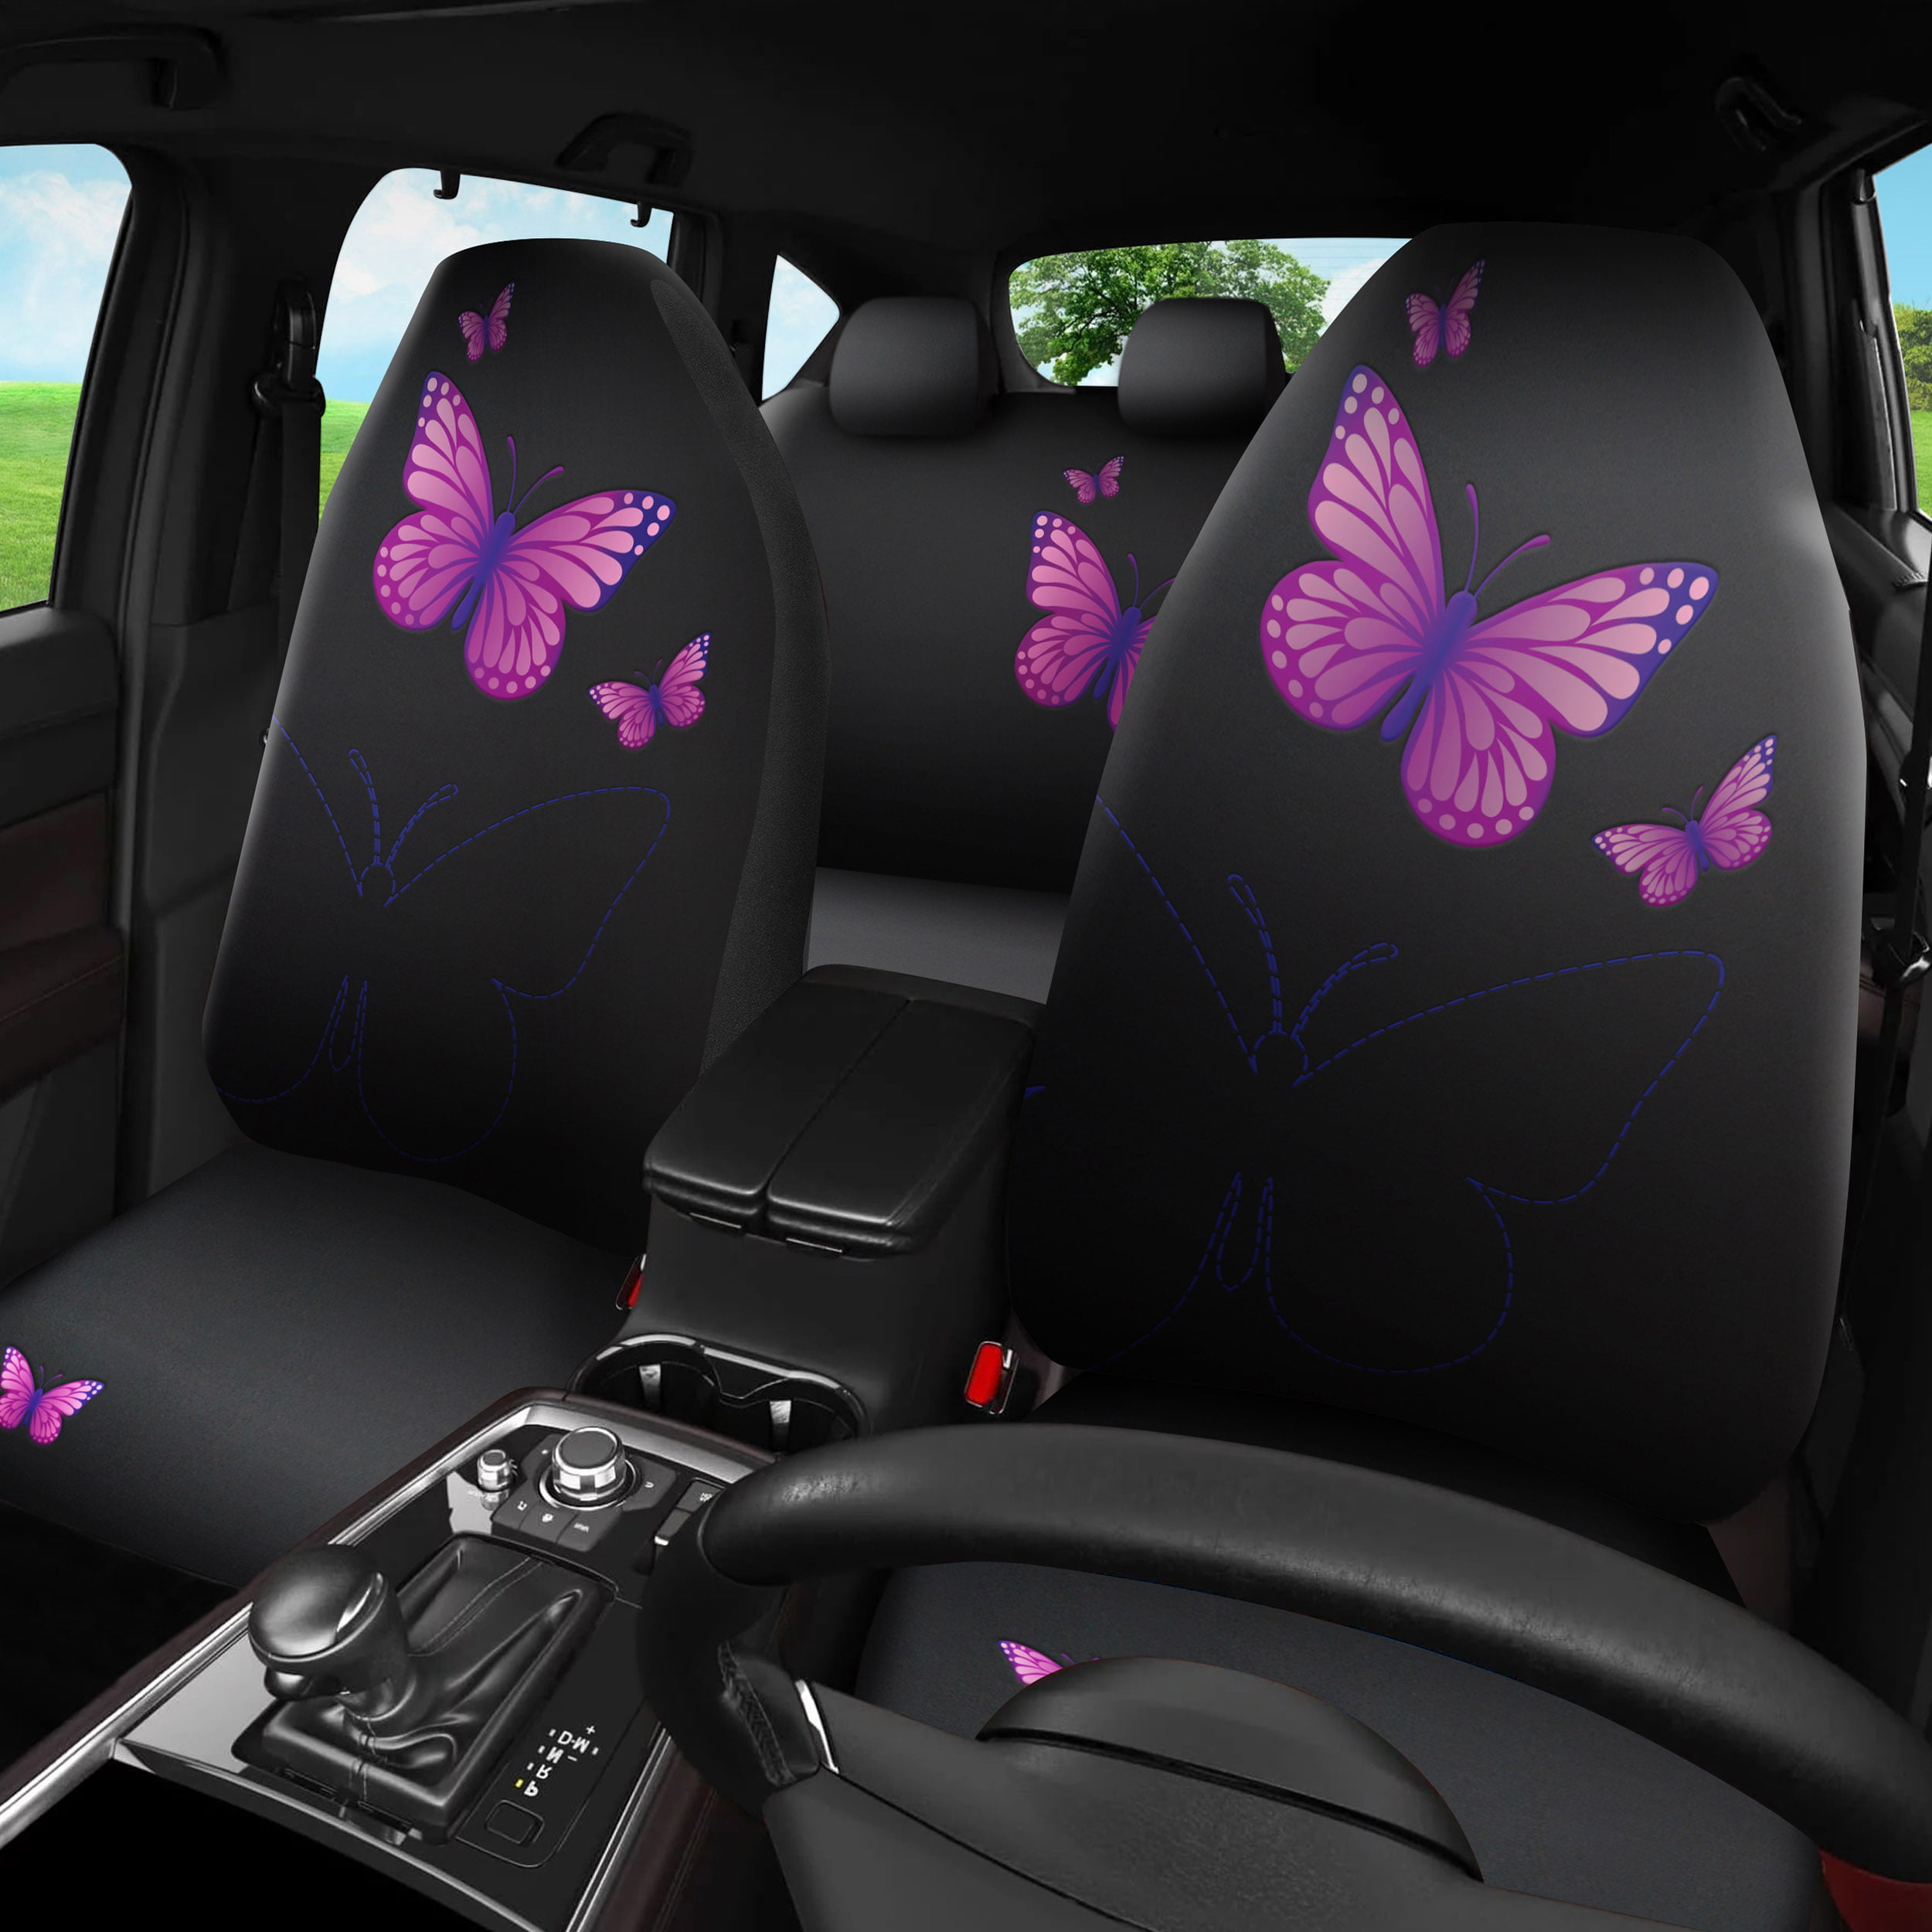 purple seat covers walmart